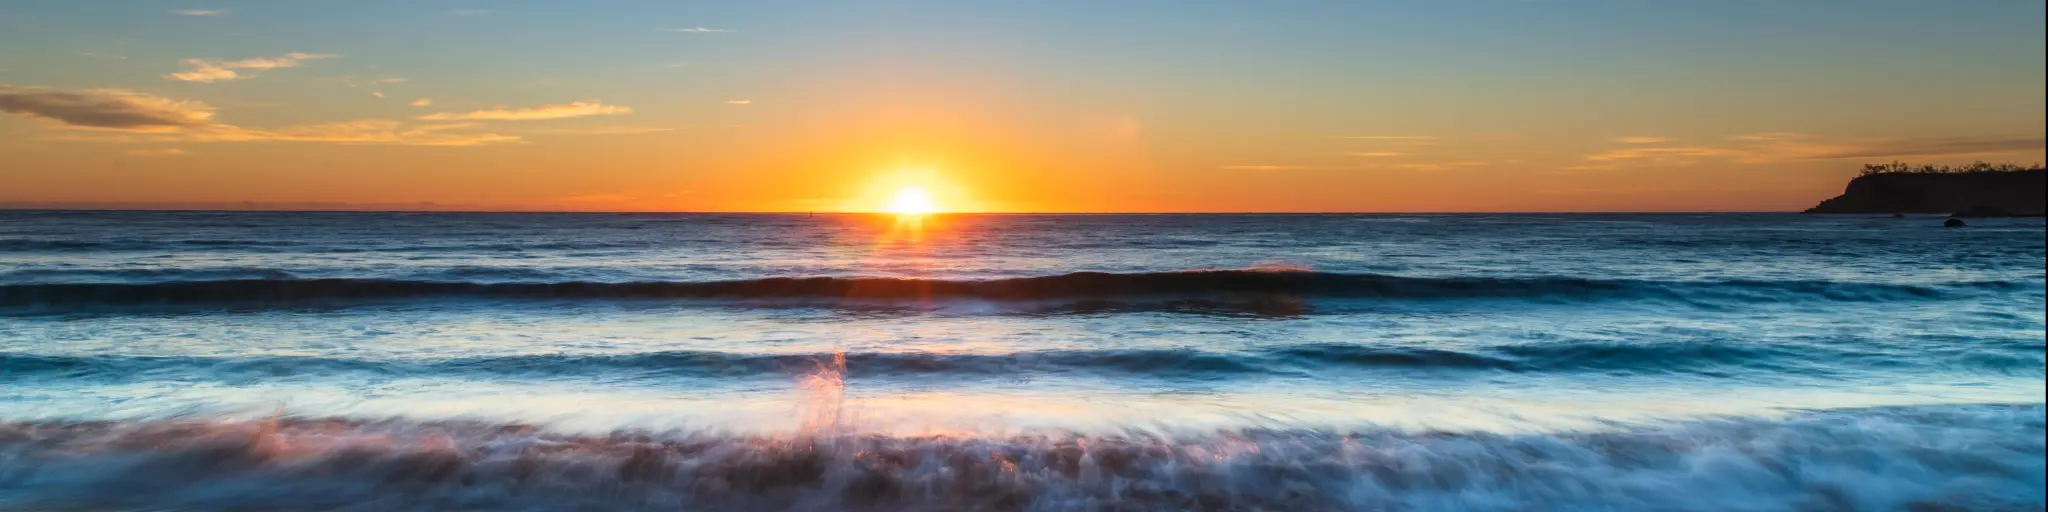 Vibrant sunrise light illuminating calm water breaking on a beach